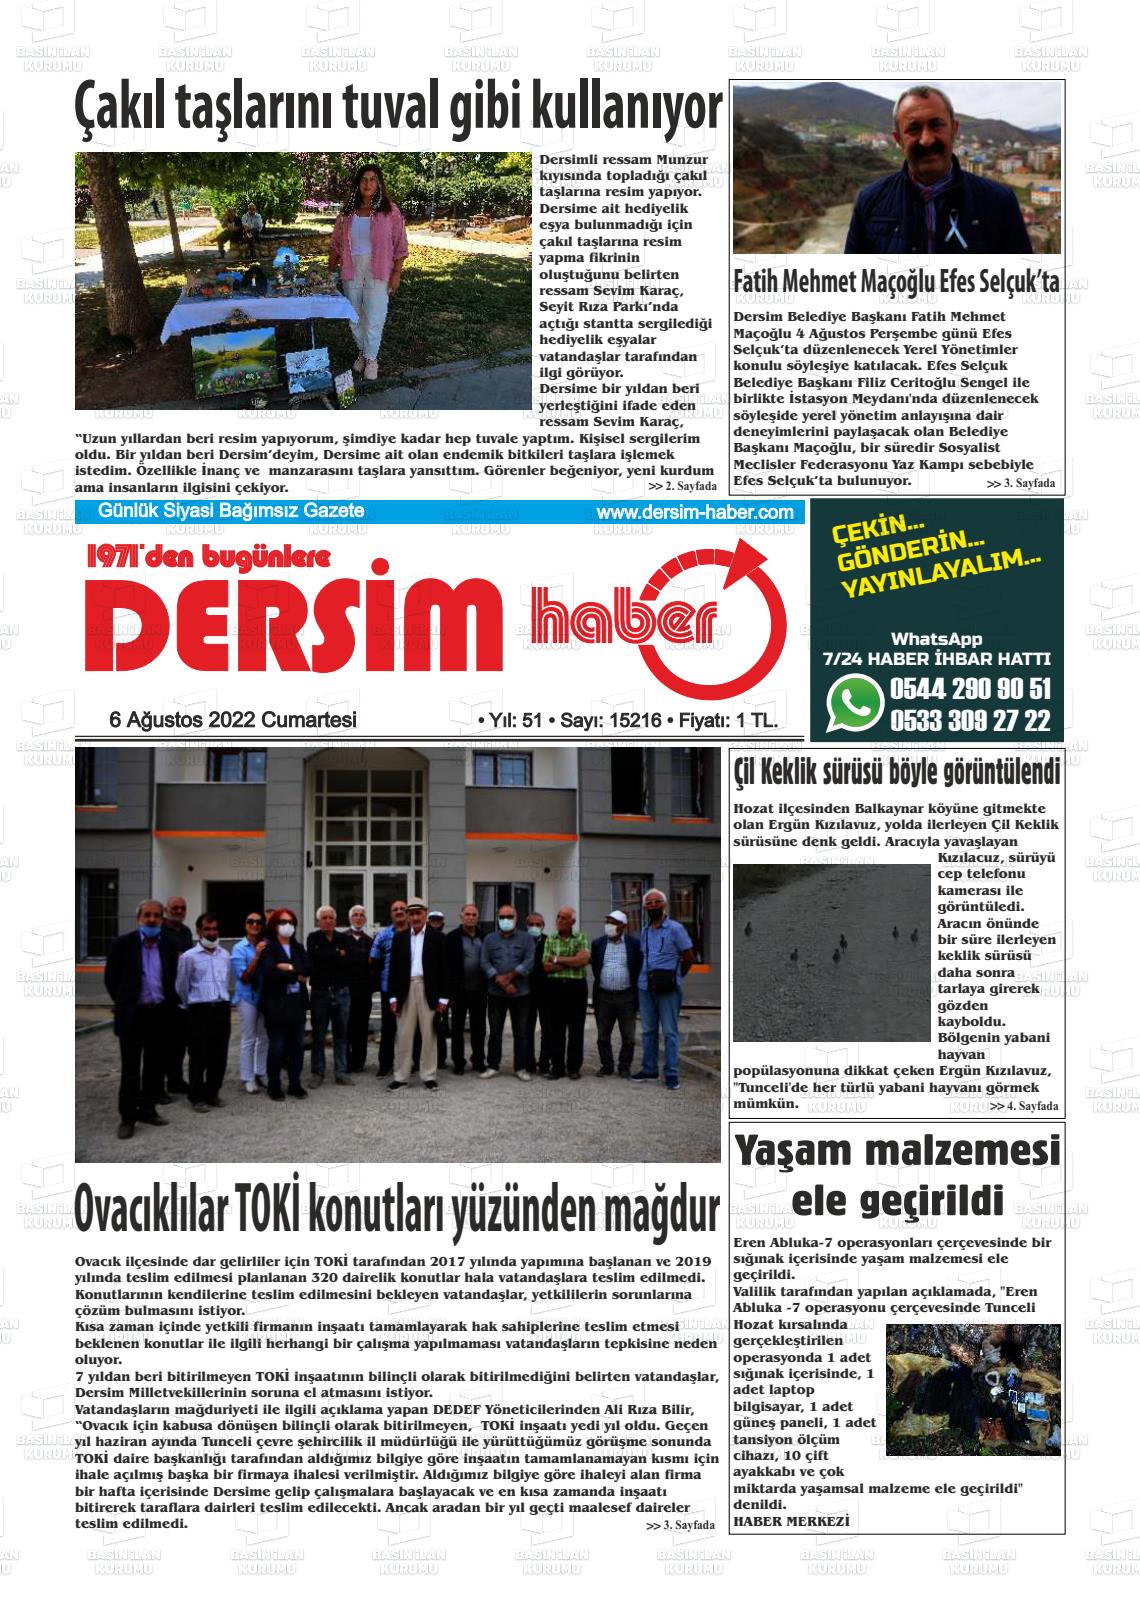 06 Ağustos 2022 DERSİM HABER Gazete Manşeti